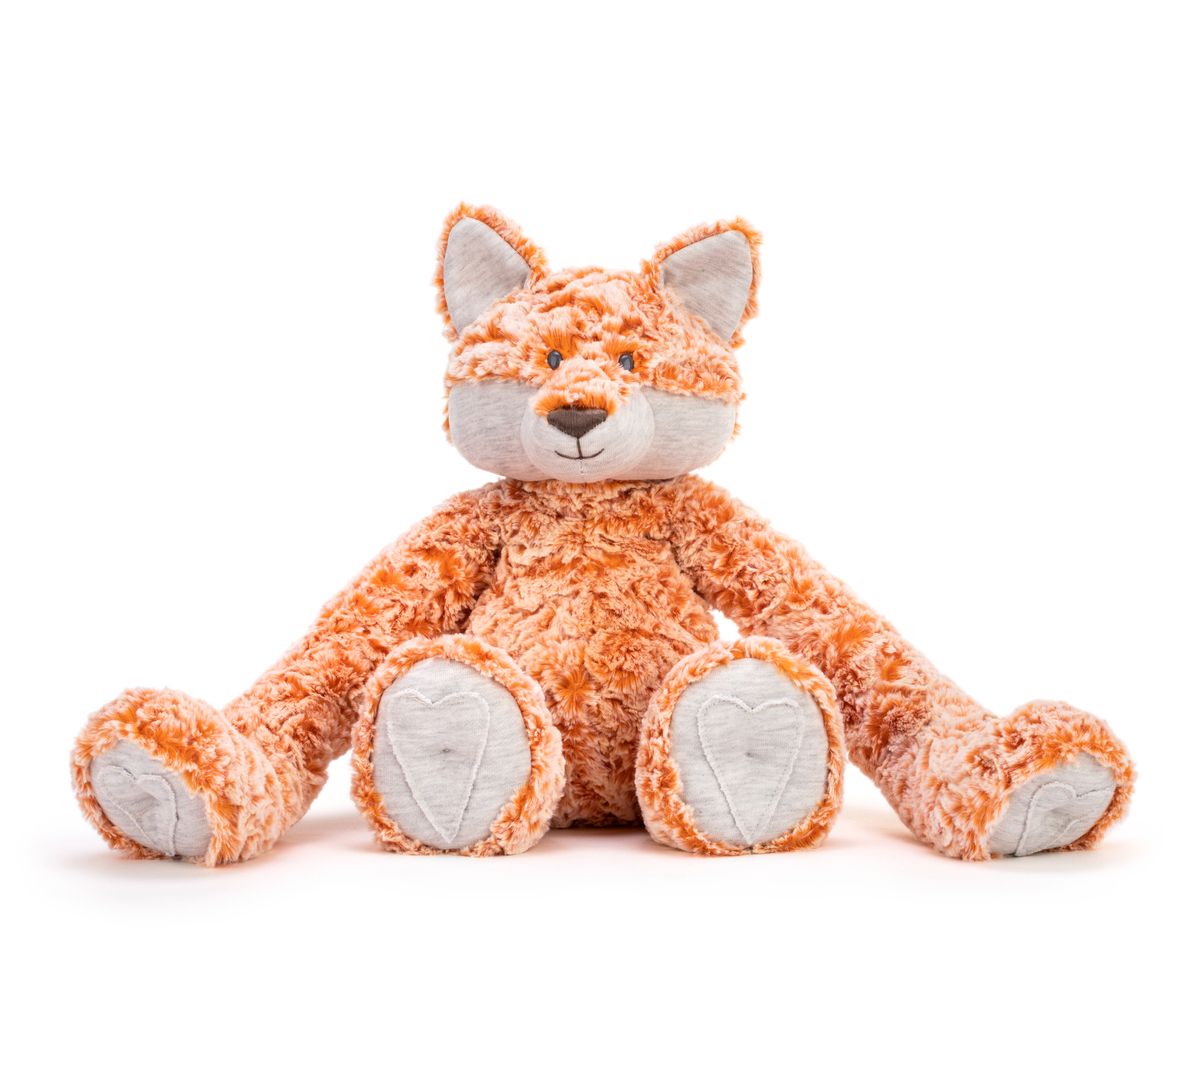 SHRADS Plush Stuffed Animals For Cuddling, Stuffed Plush Toy For